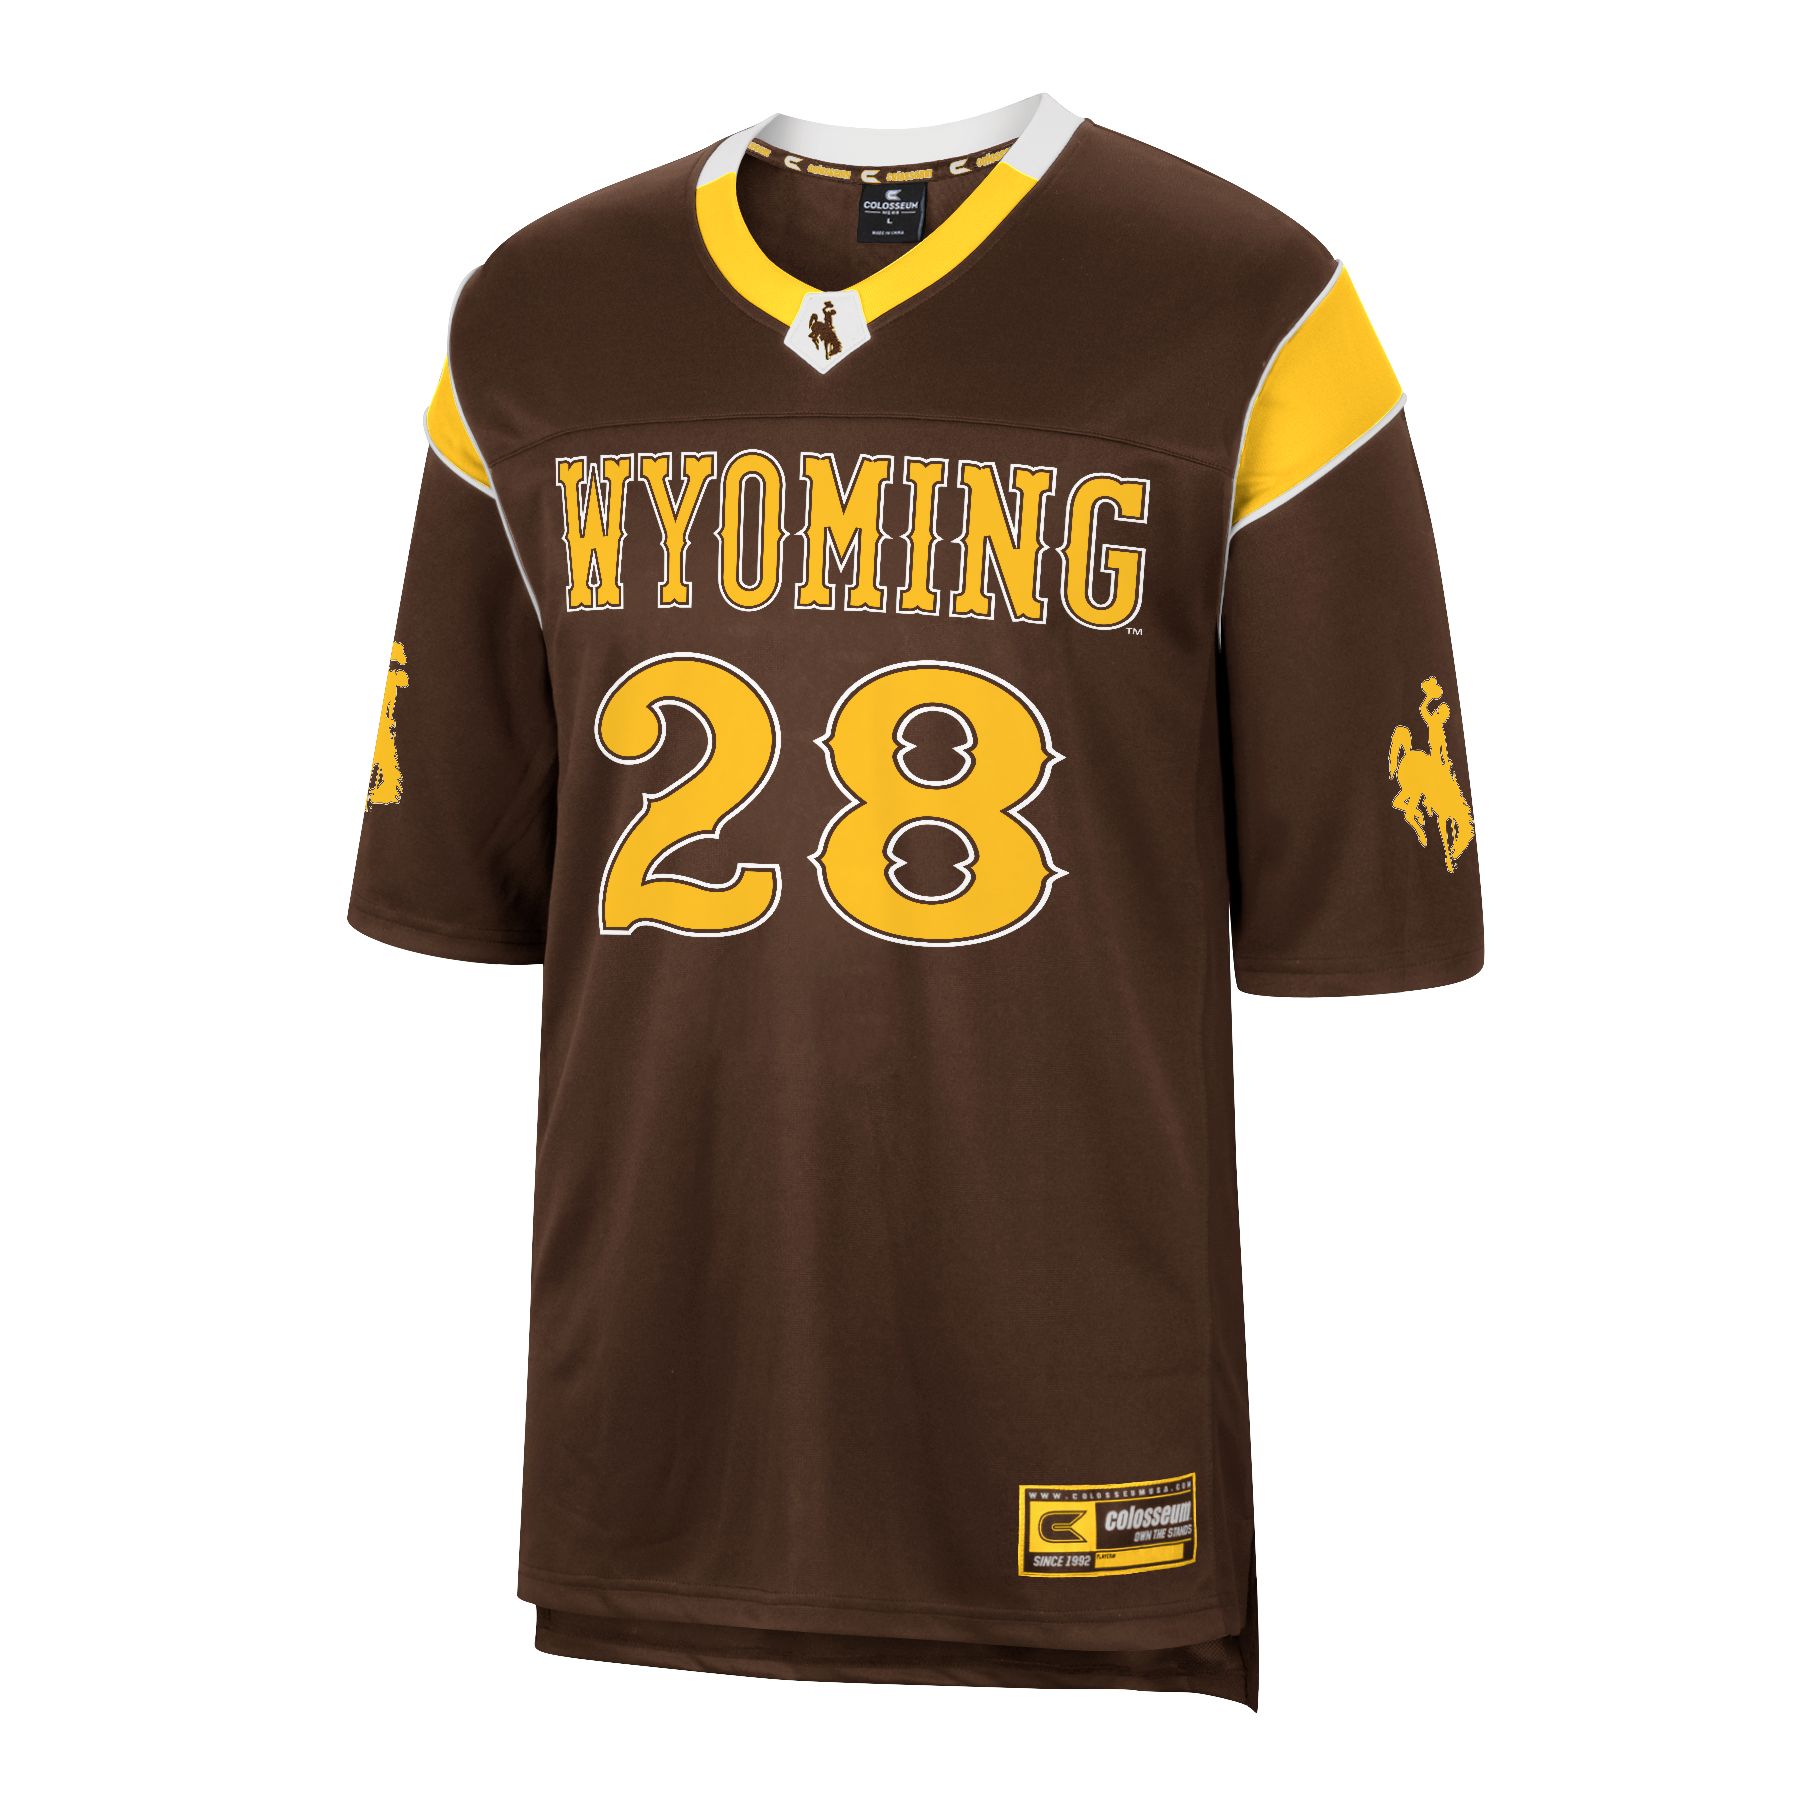 Wyoming football jersey crypto blender intro